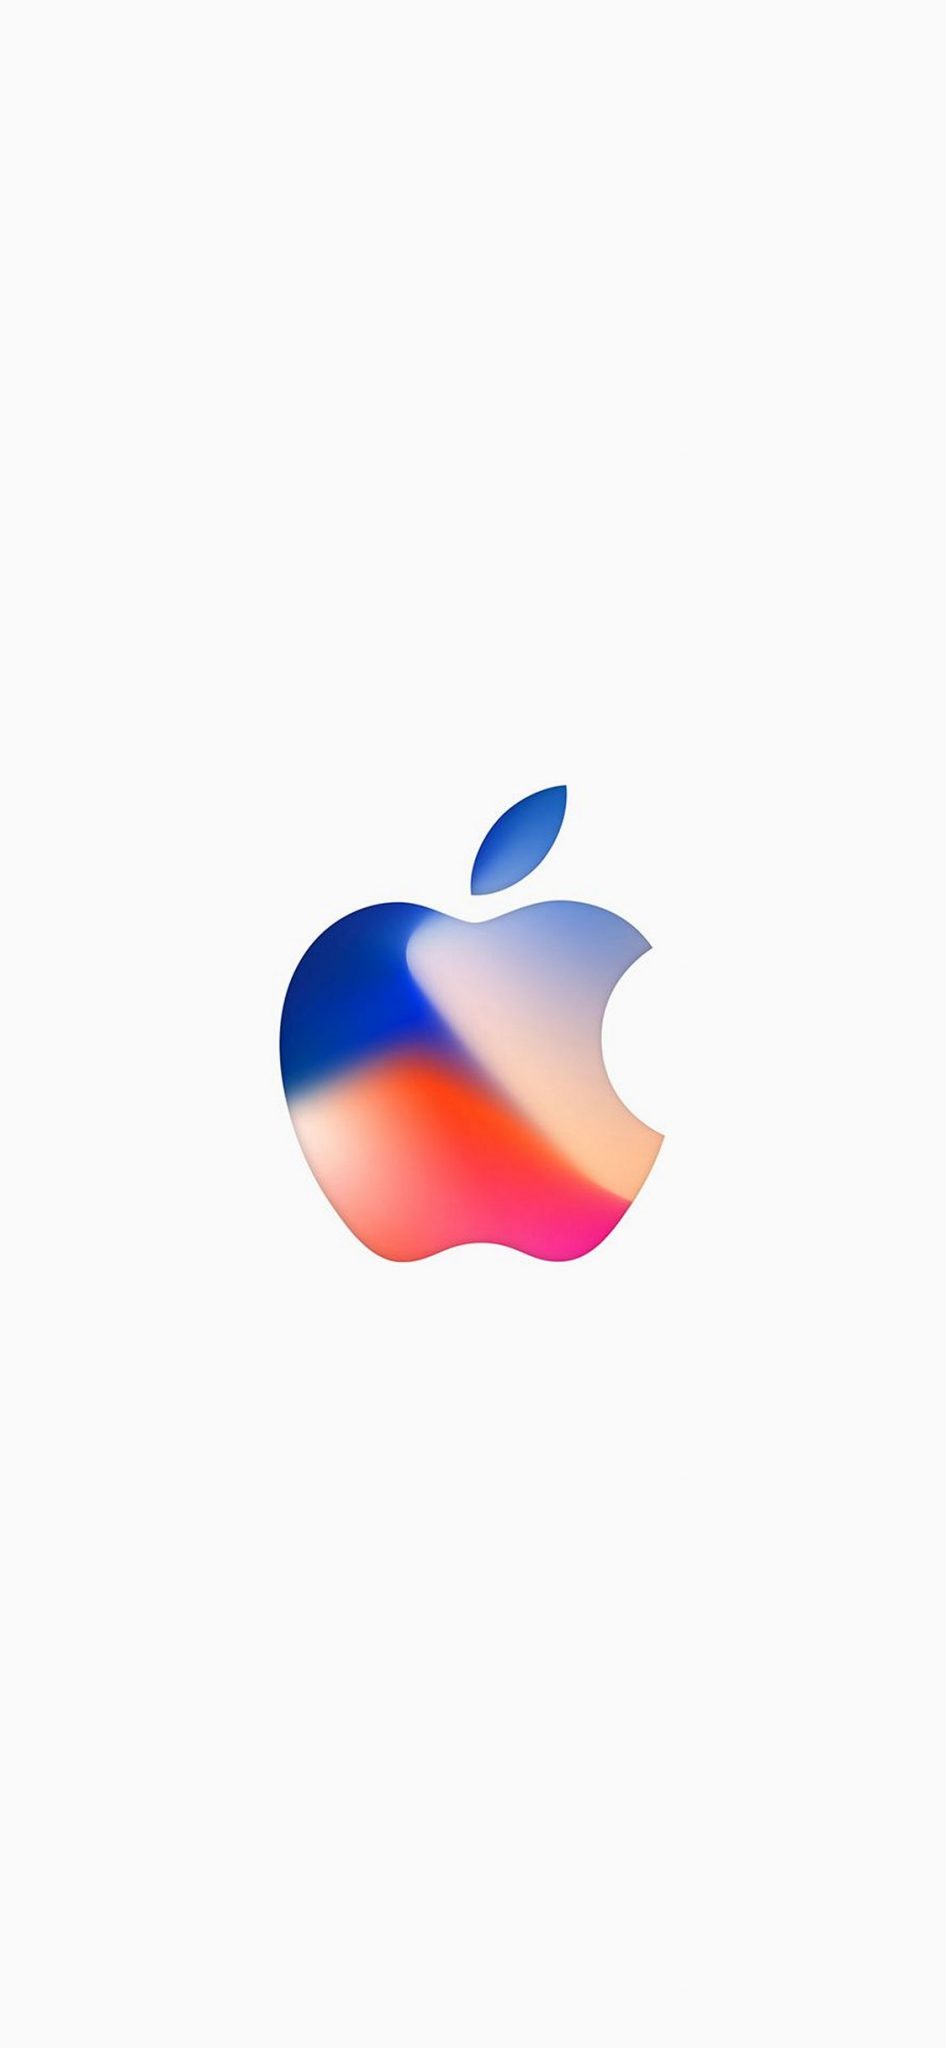 Apple Logo iPhone Wallpaper - 19